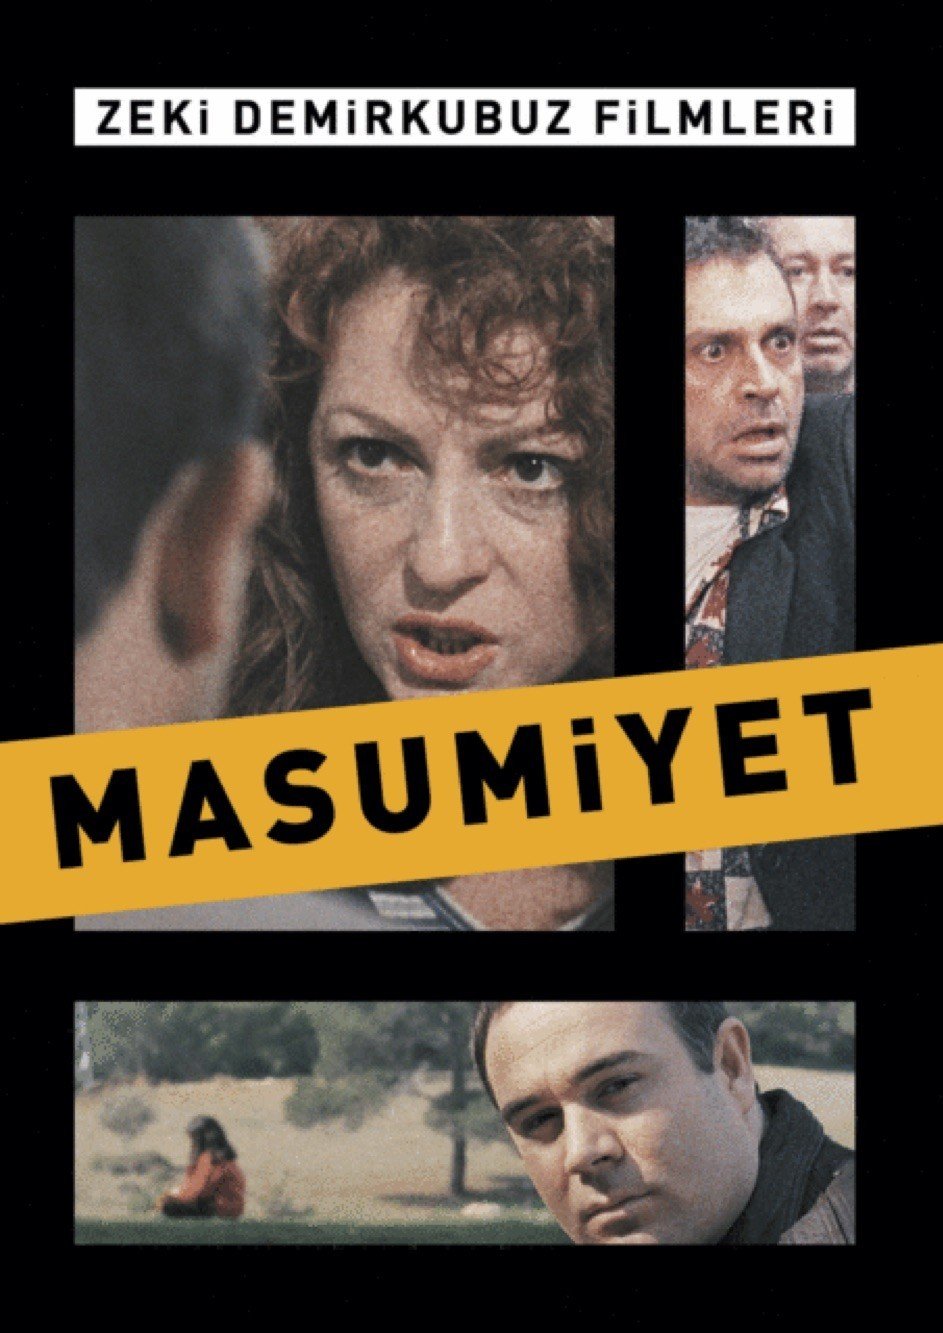 Masumiyet (Zeki Demirkubuz, 1997)